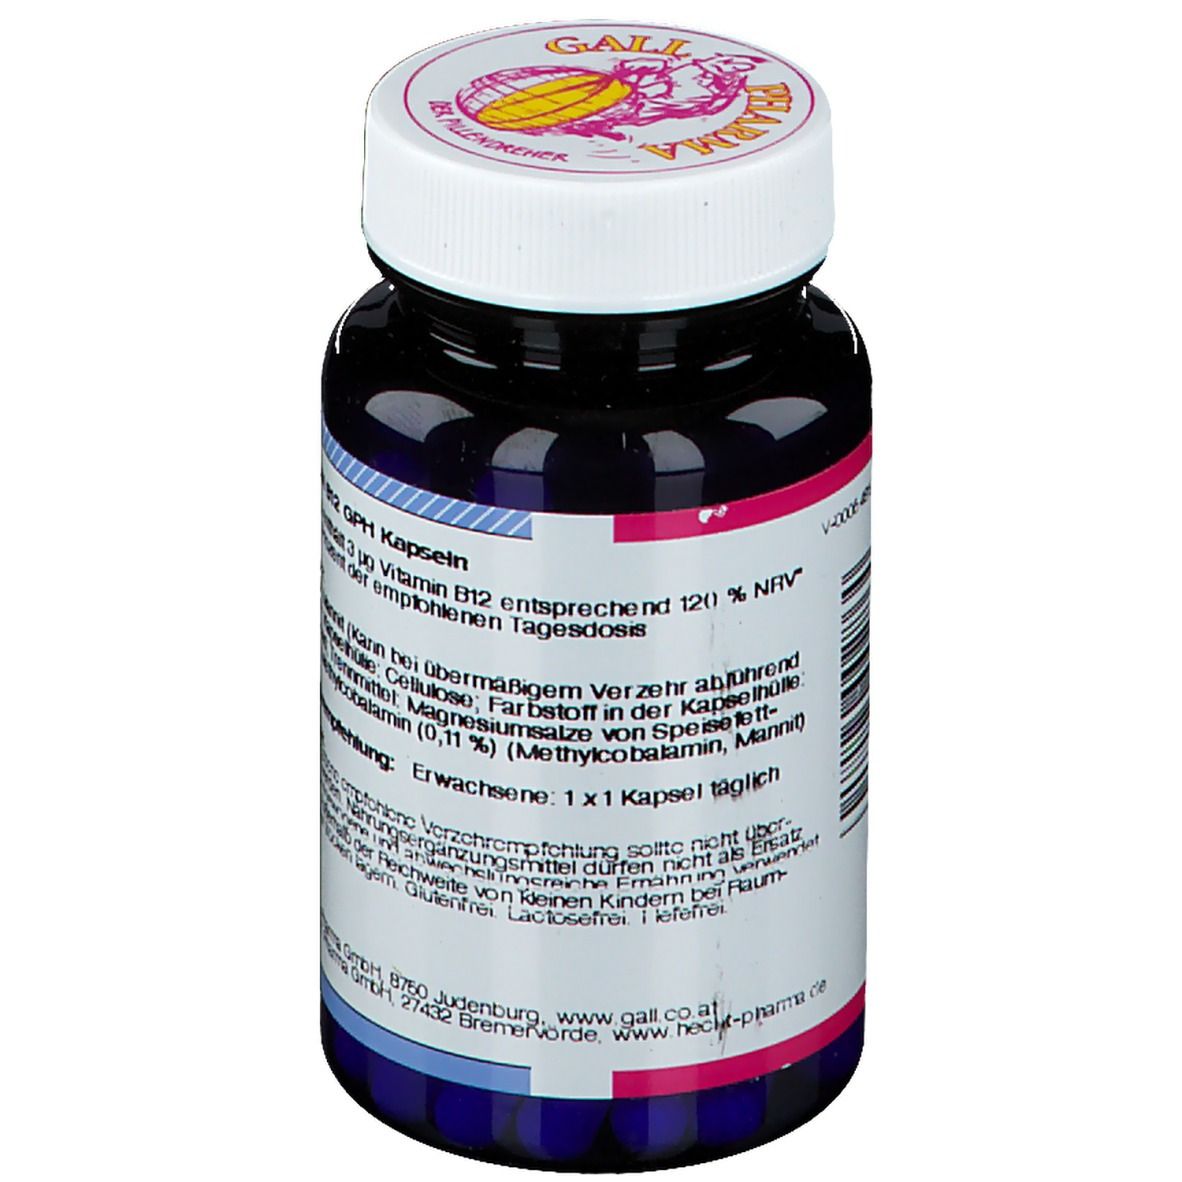 GALL PHARMA Vitamin B 12 3 µg